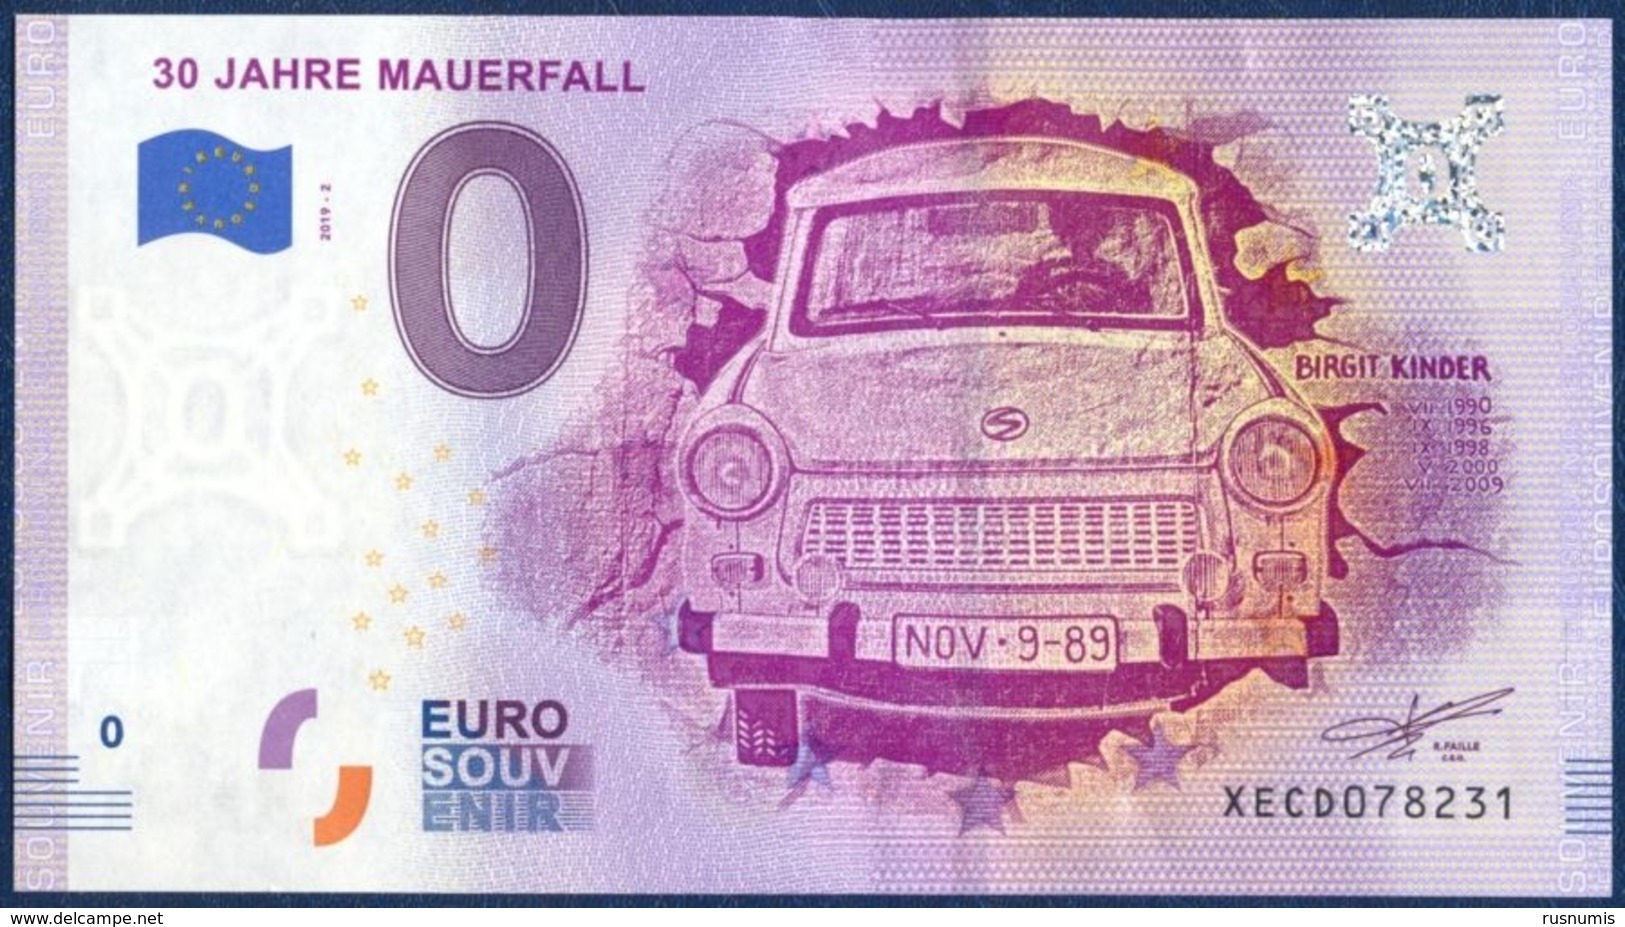 ZERO 0 EURO SOUVENIR 30th ANNIVERSARY FALL OF BERLIN WALL MAUERFALL GERMANY 2019 UNC - Pruebas Privadas